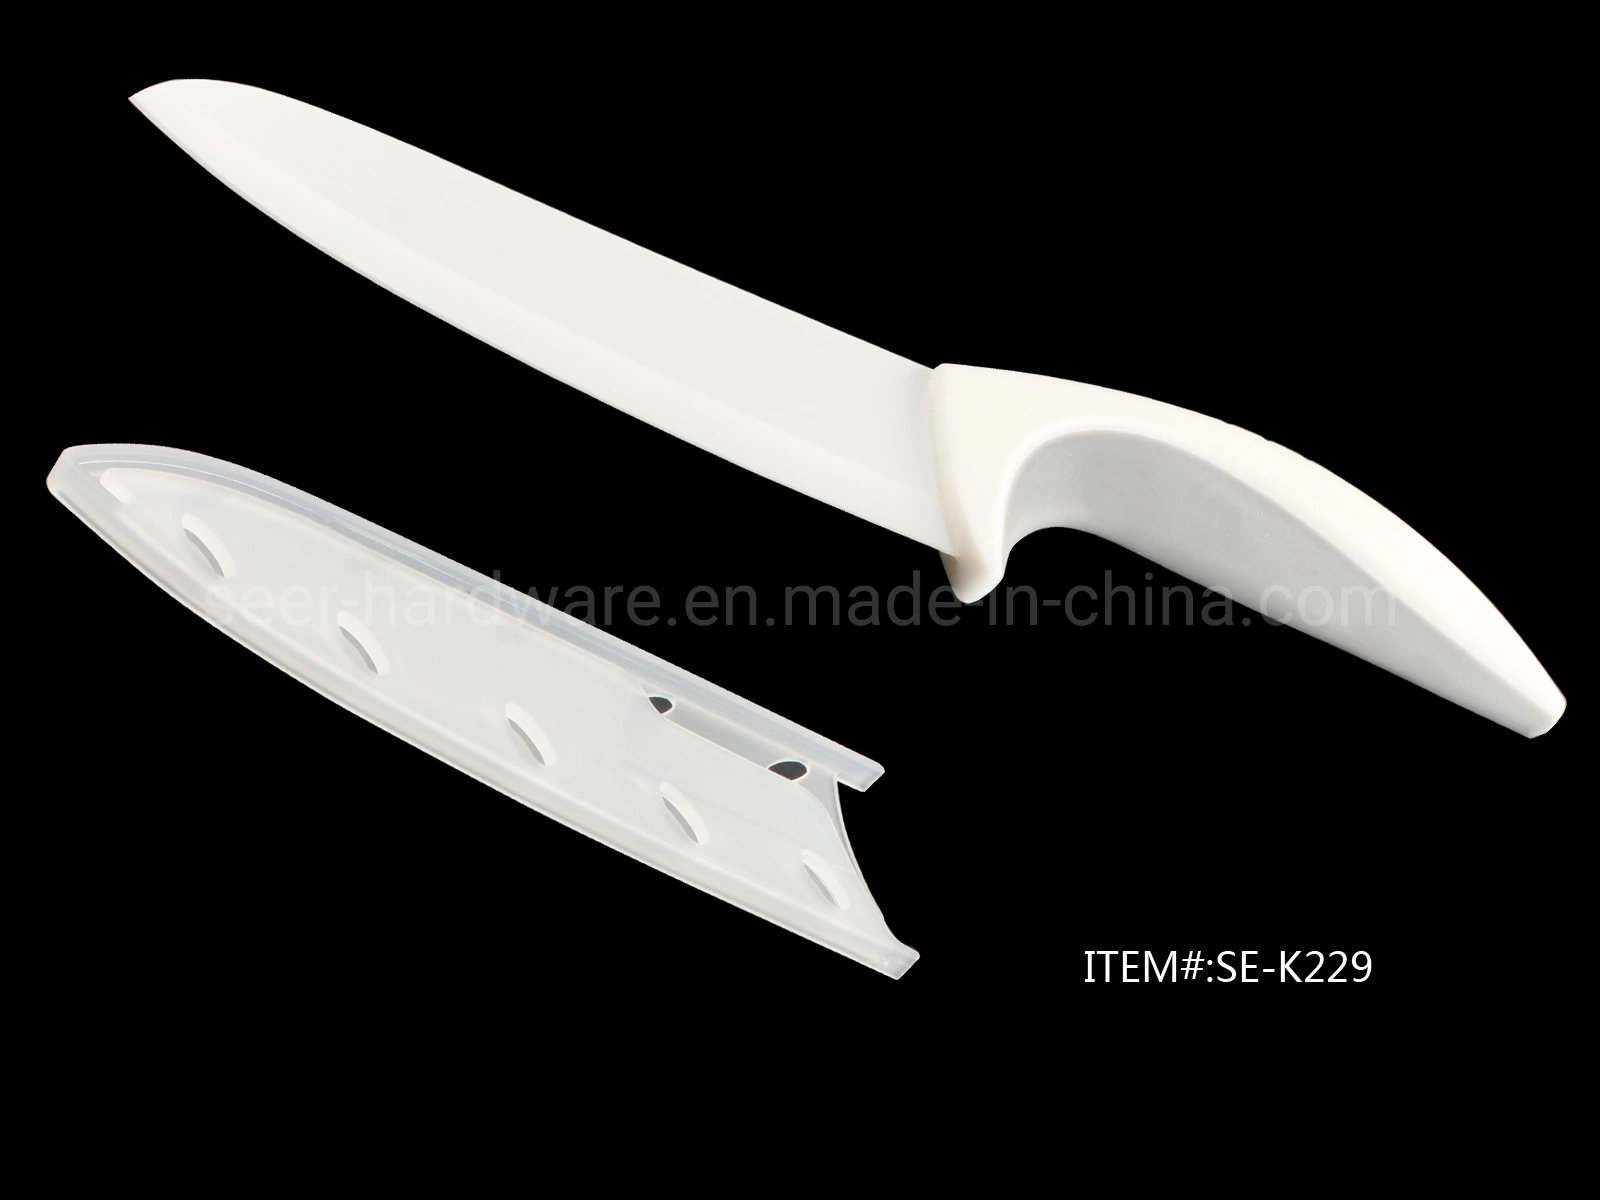 Ceramic Knife, Kitchen Knife, Utility Knife with Rubber Handle (SE-K229)